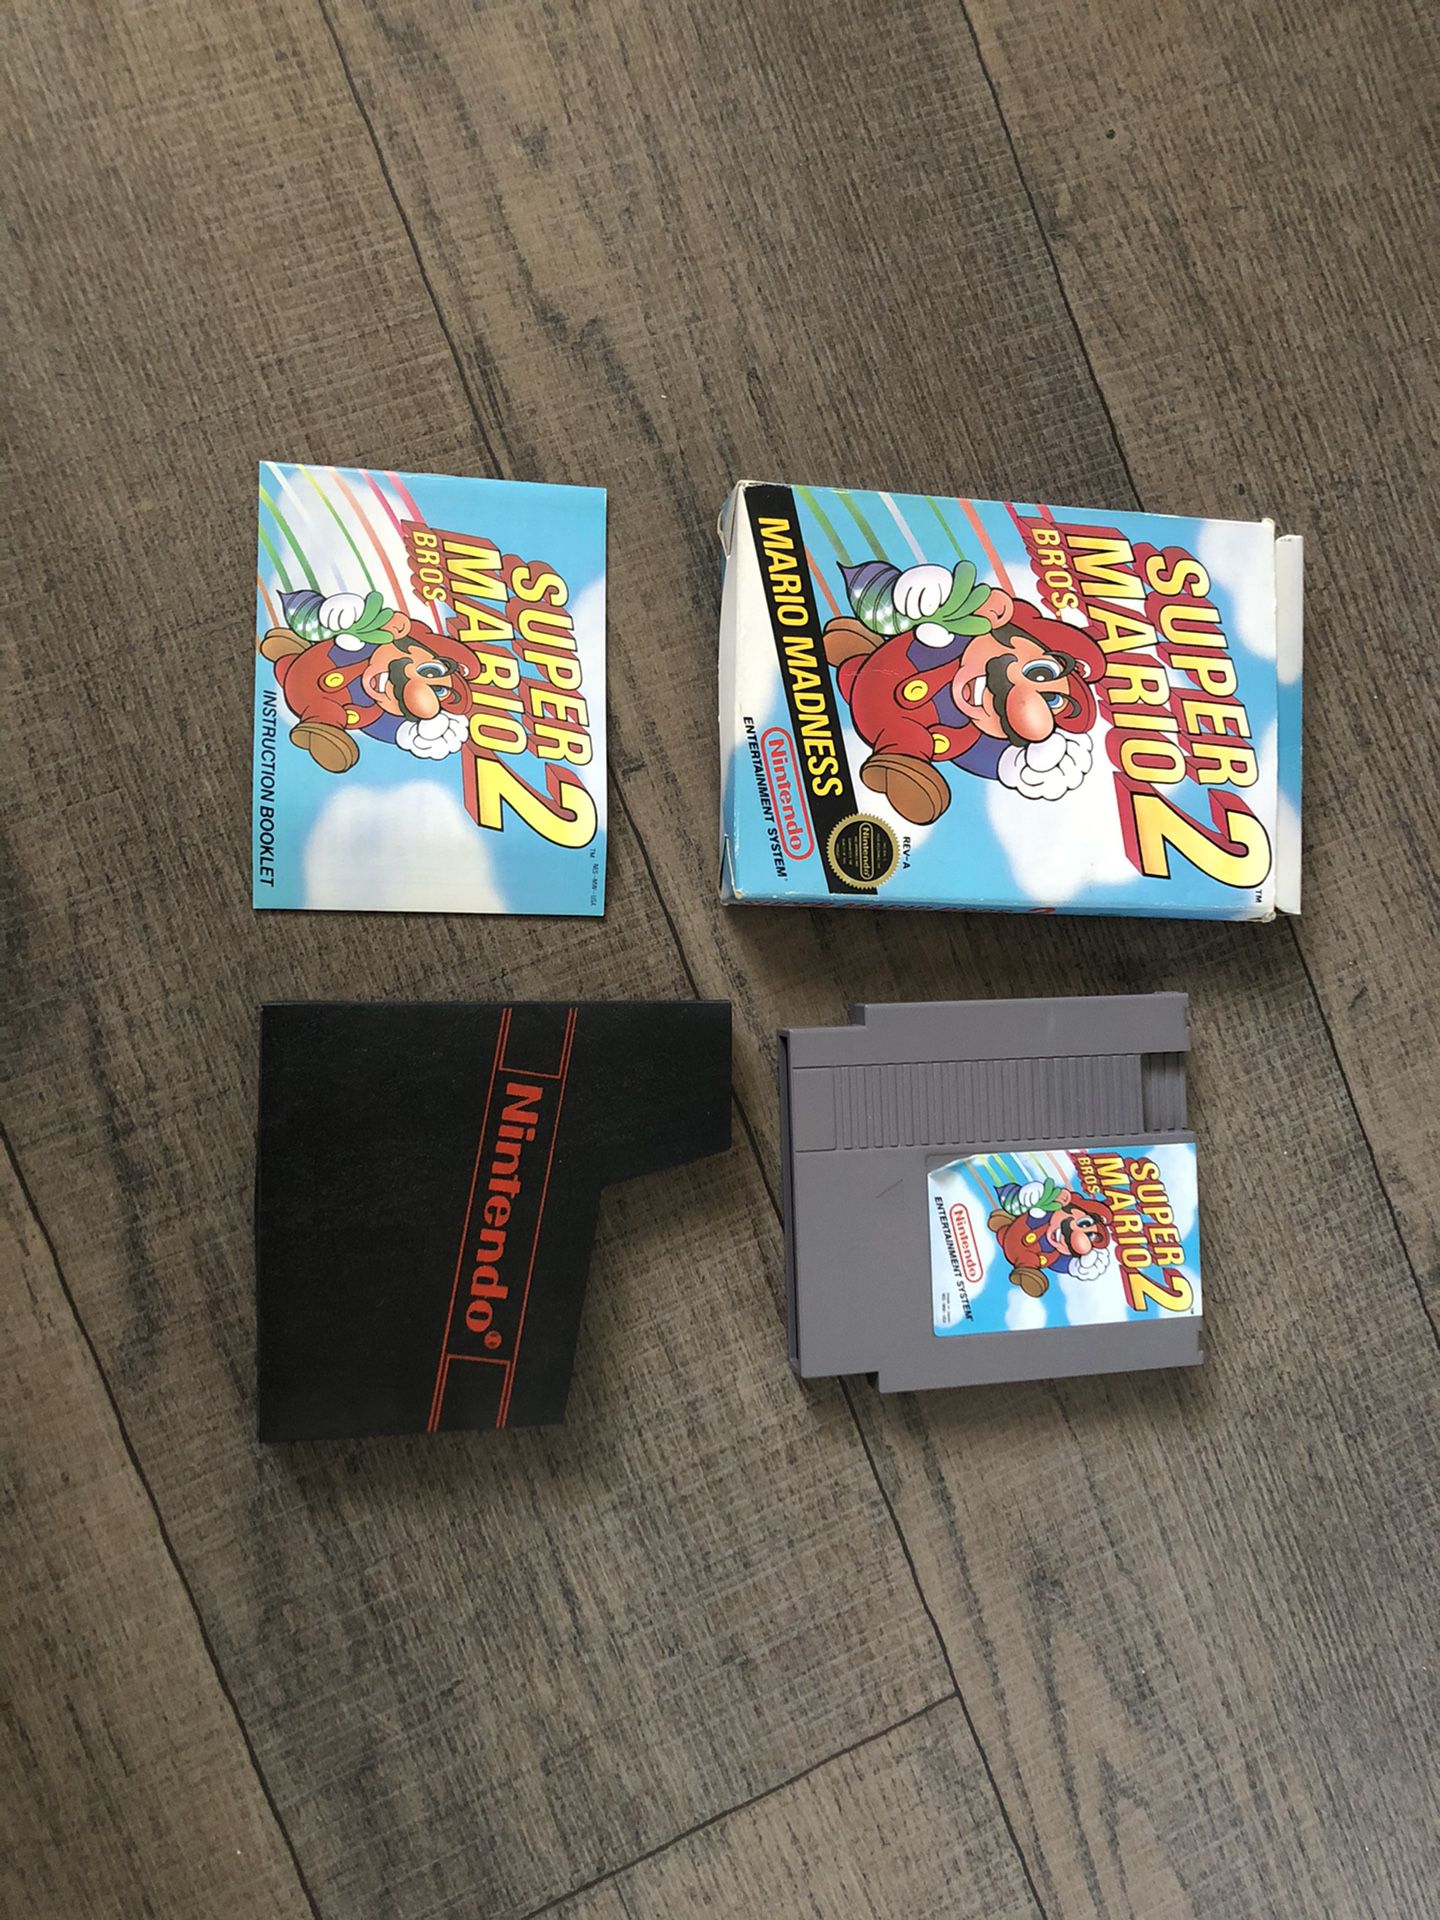 Super Mario Bros 2 Nintendo NES Game Complete in Box